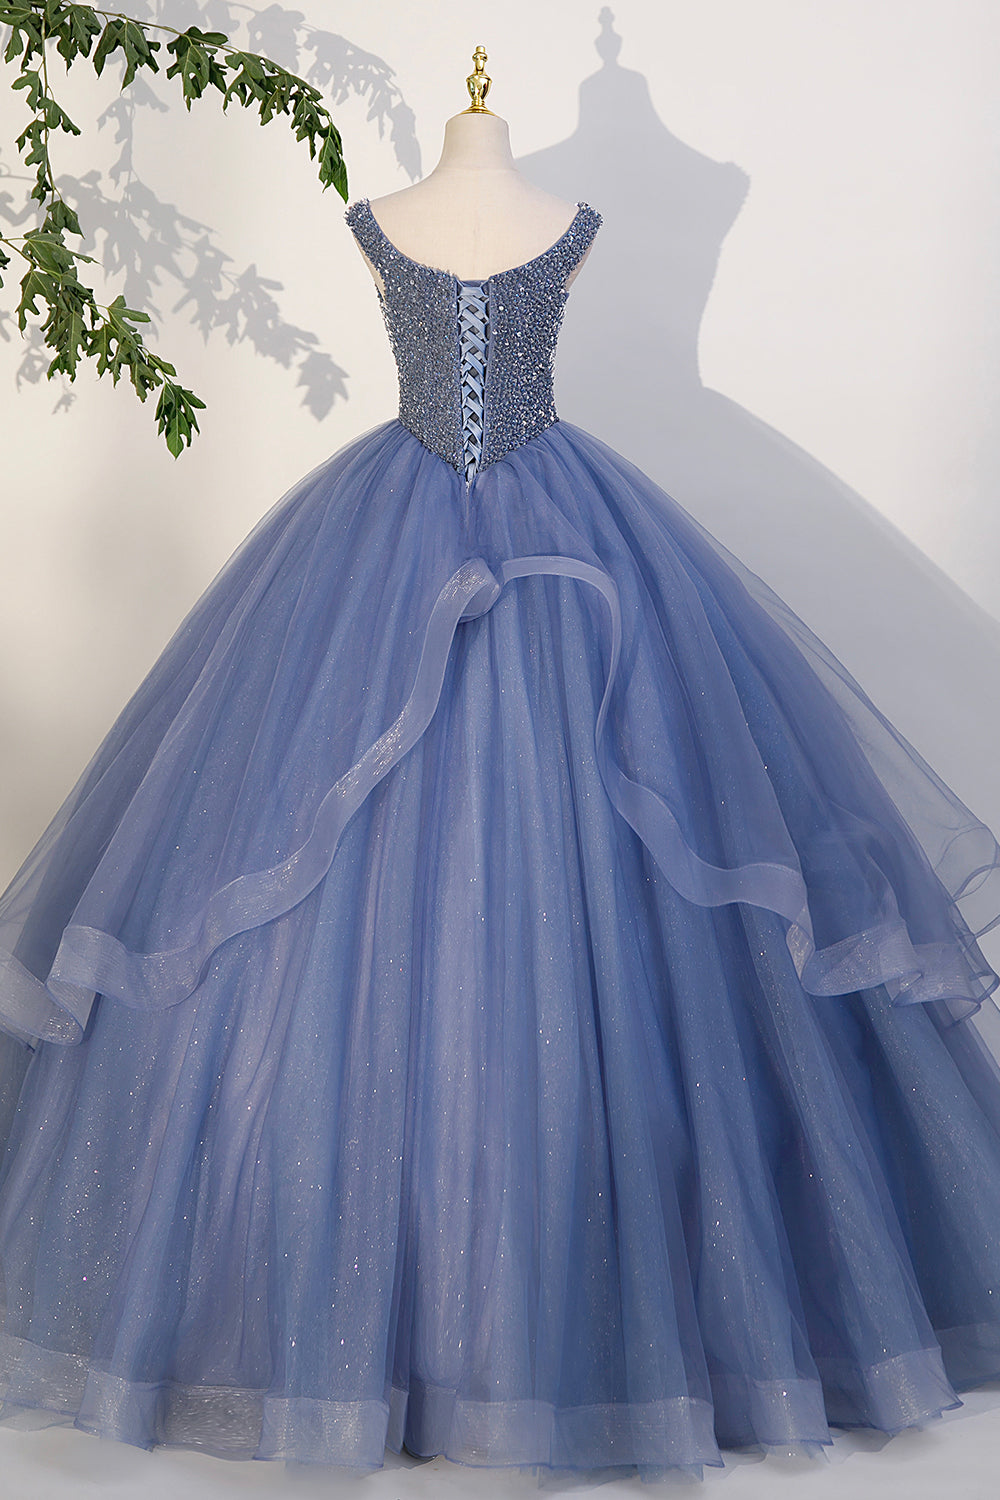 Blue Beaded Tulle Long A-Line Prom Dress, Blue Formal Dress